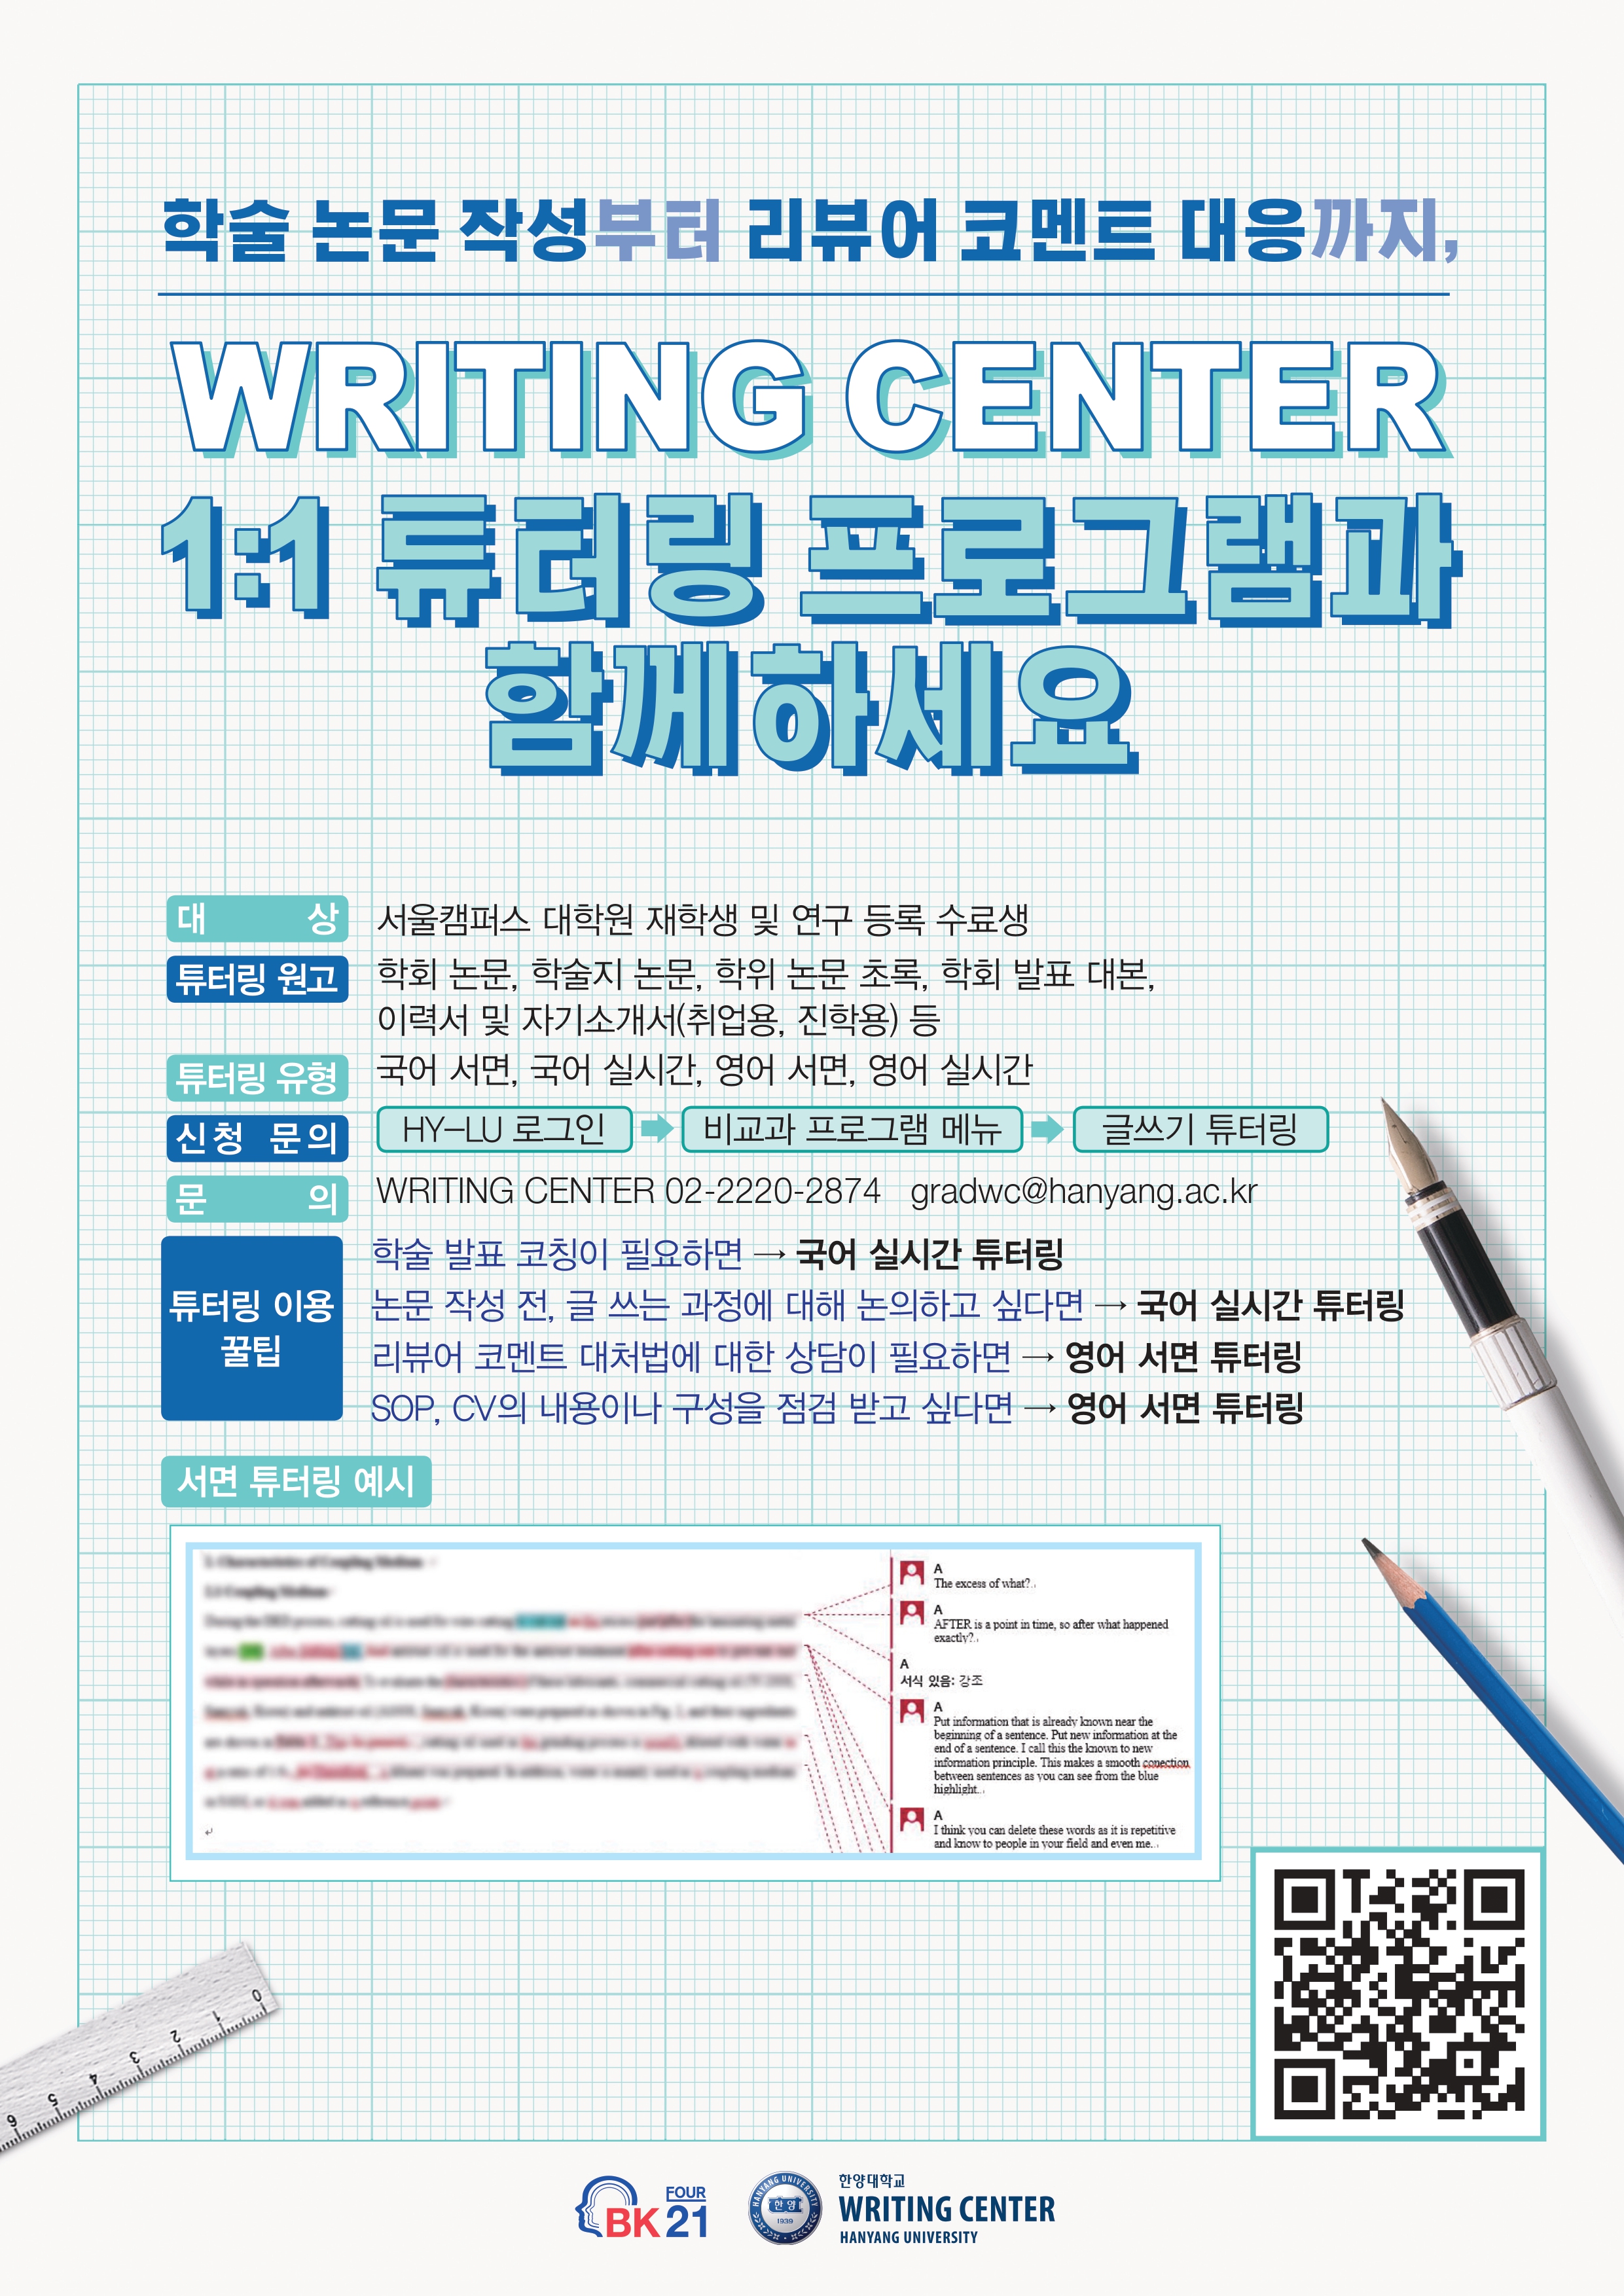 WRITING CENTER 대학원 튜터링 포스터.jpg